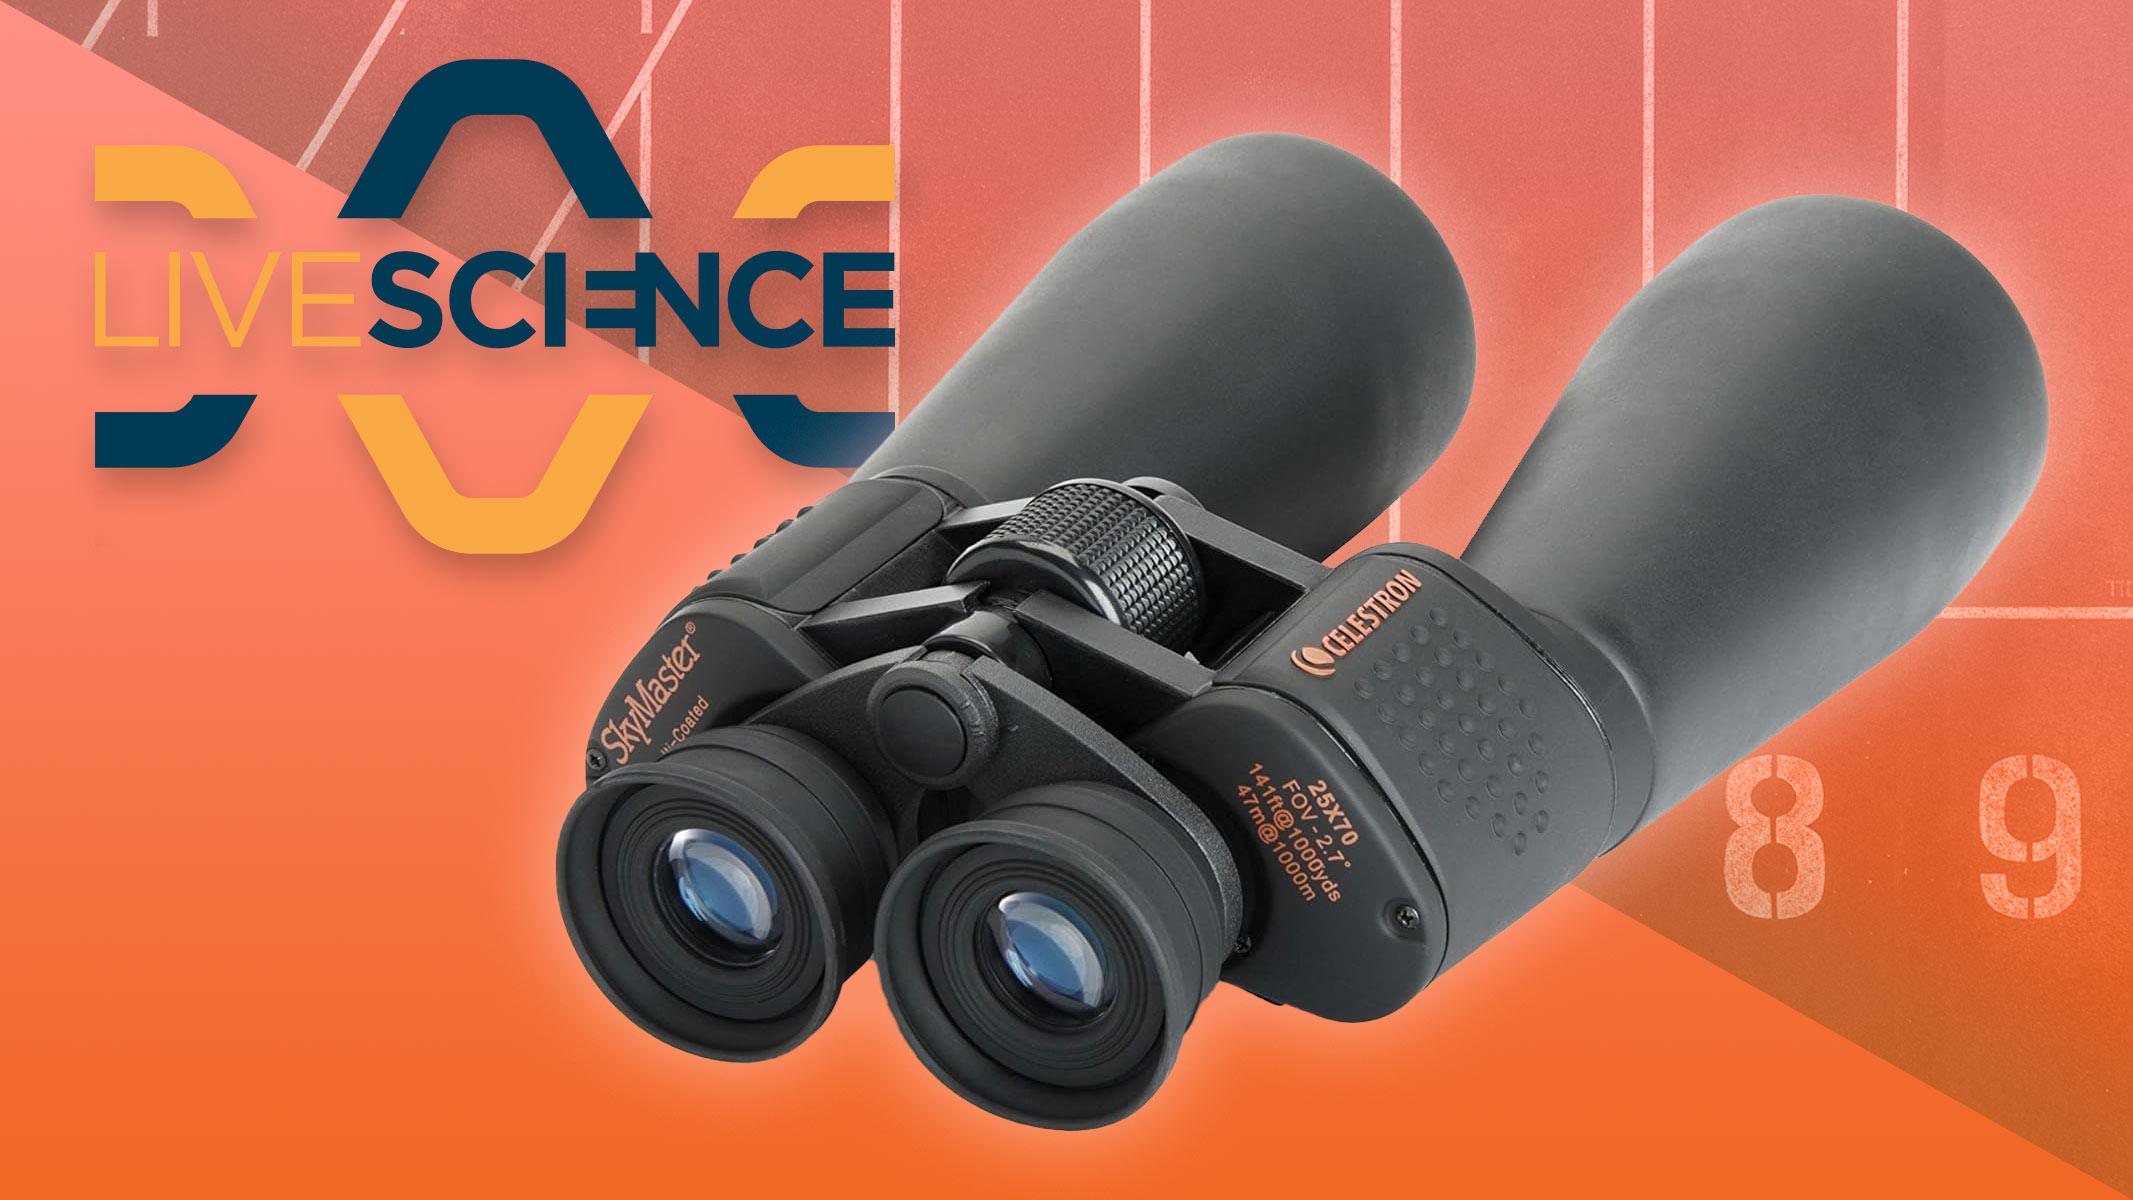 Celestron binoculars deal: Lowest price we've seen them all year